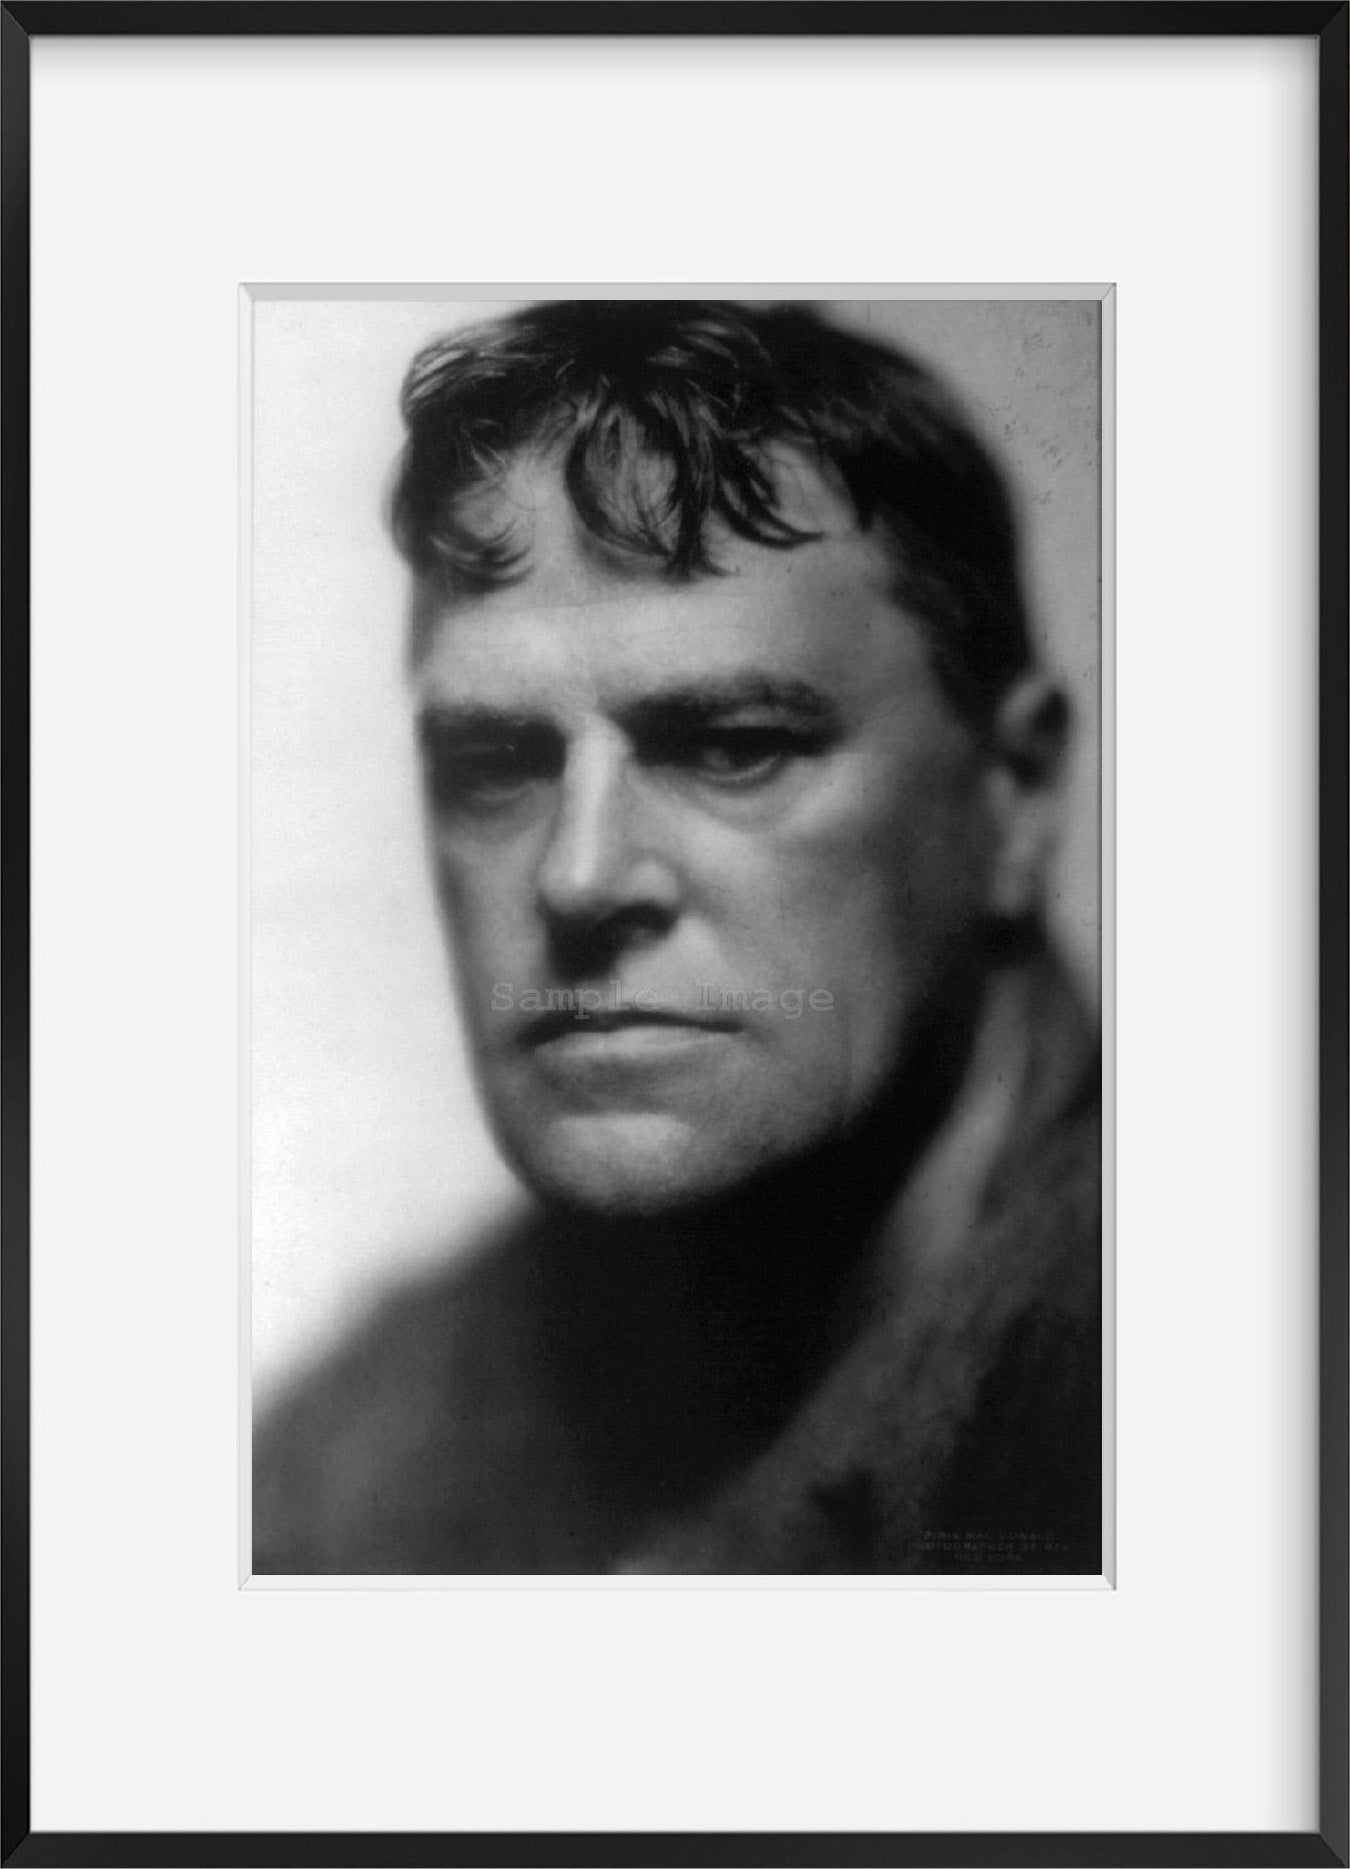 1922 photograph of Albert Payson Terhune, novelist, scenarist, head-and-shoulder